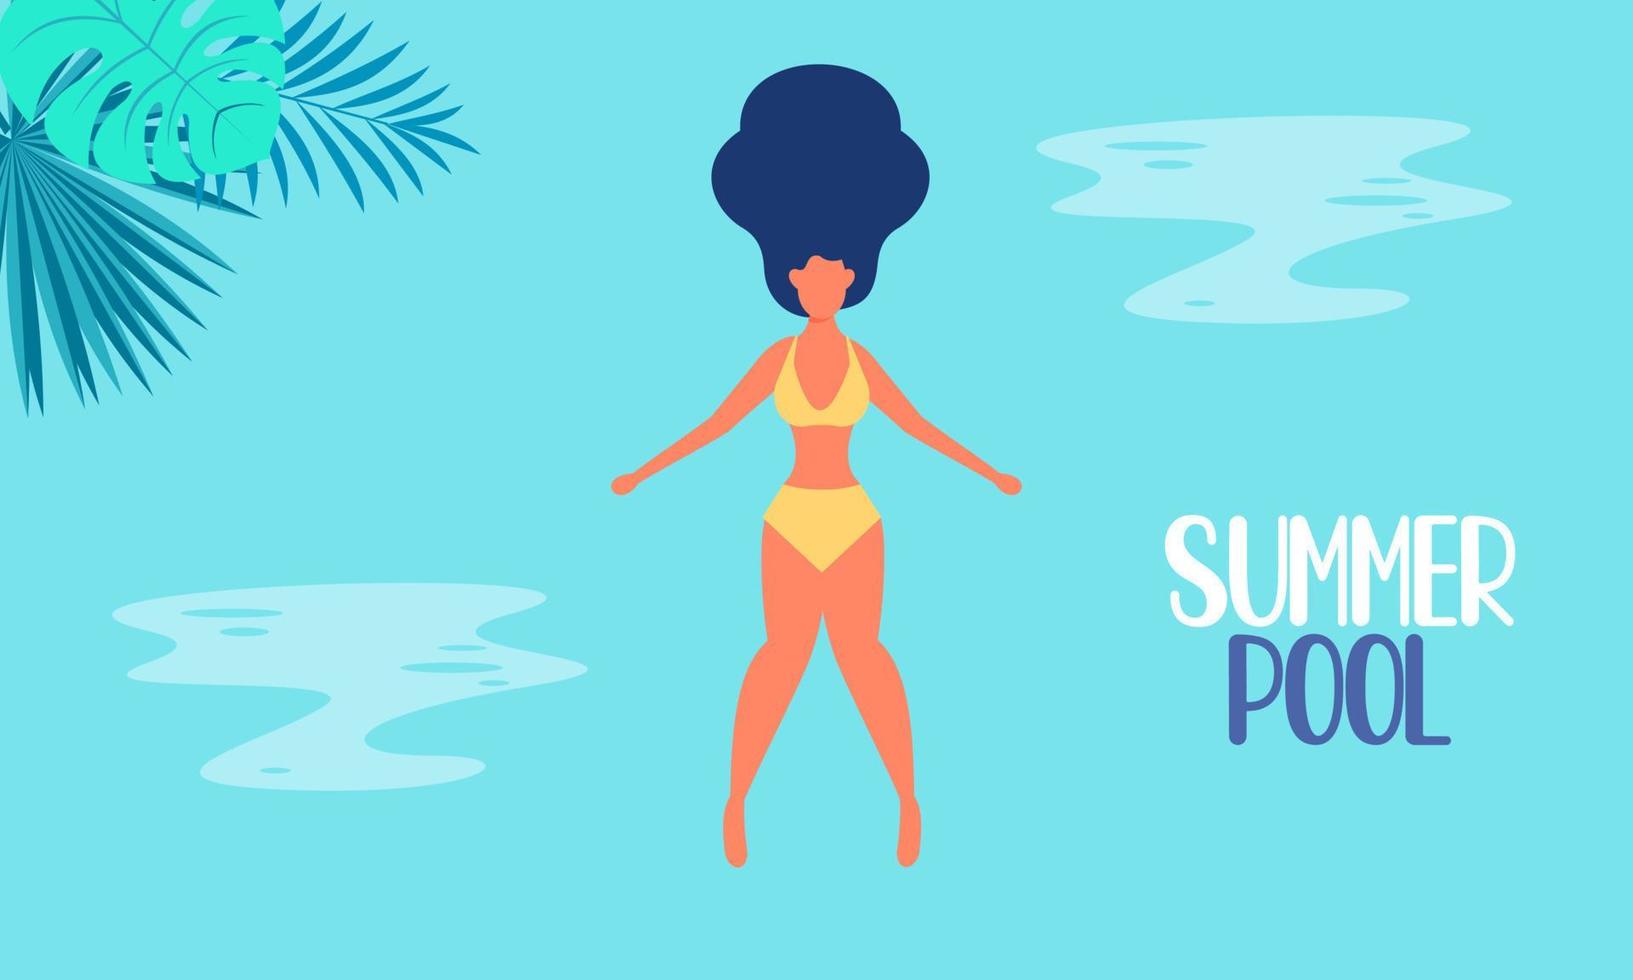 Summer pool party invitation illustration vector